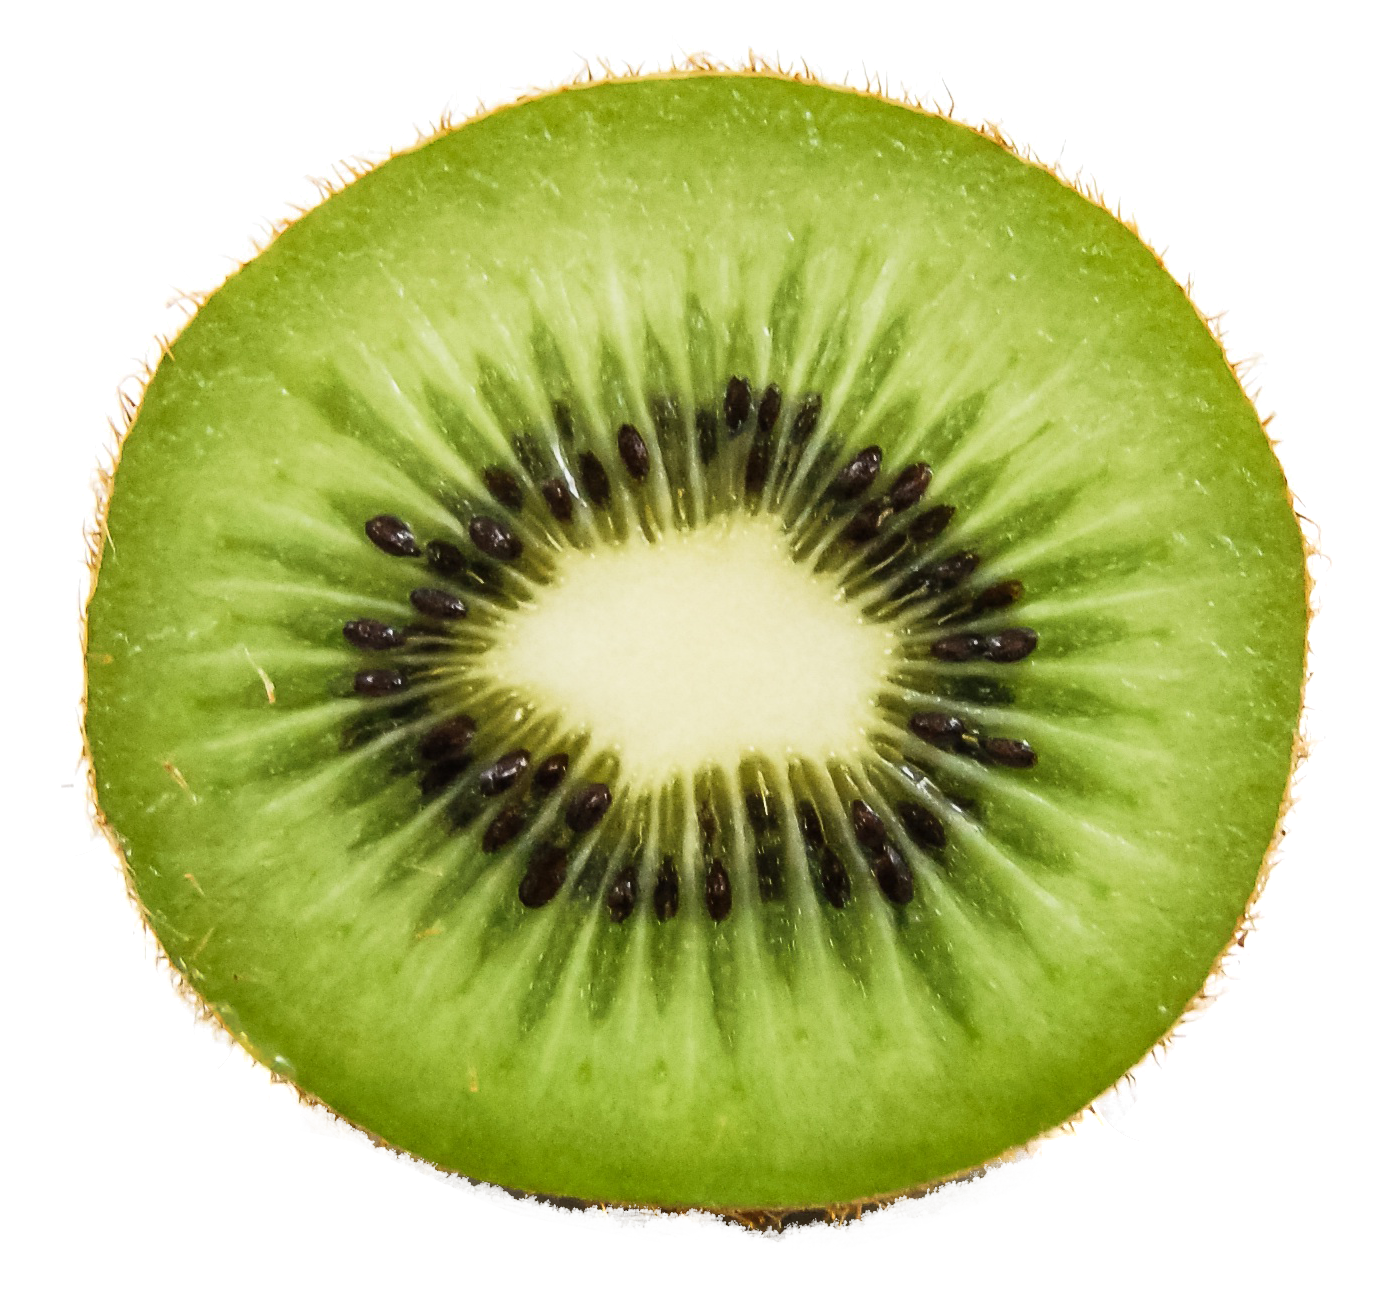 slice of kiwi